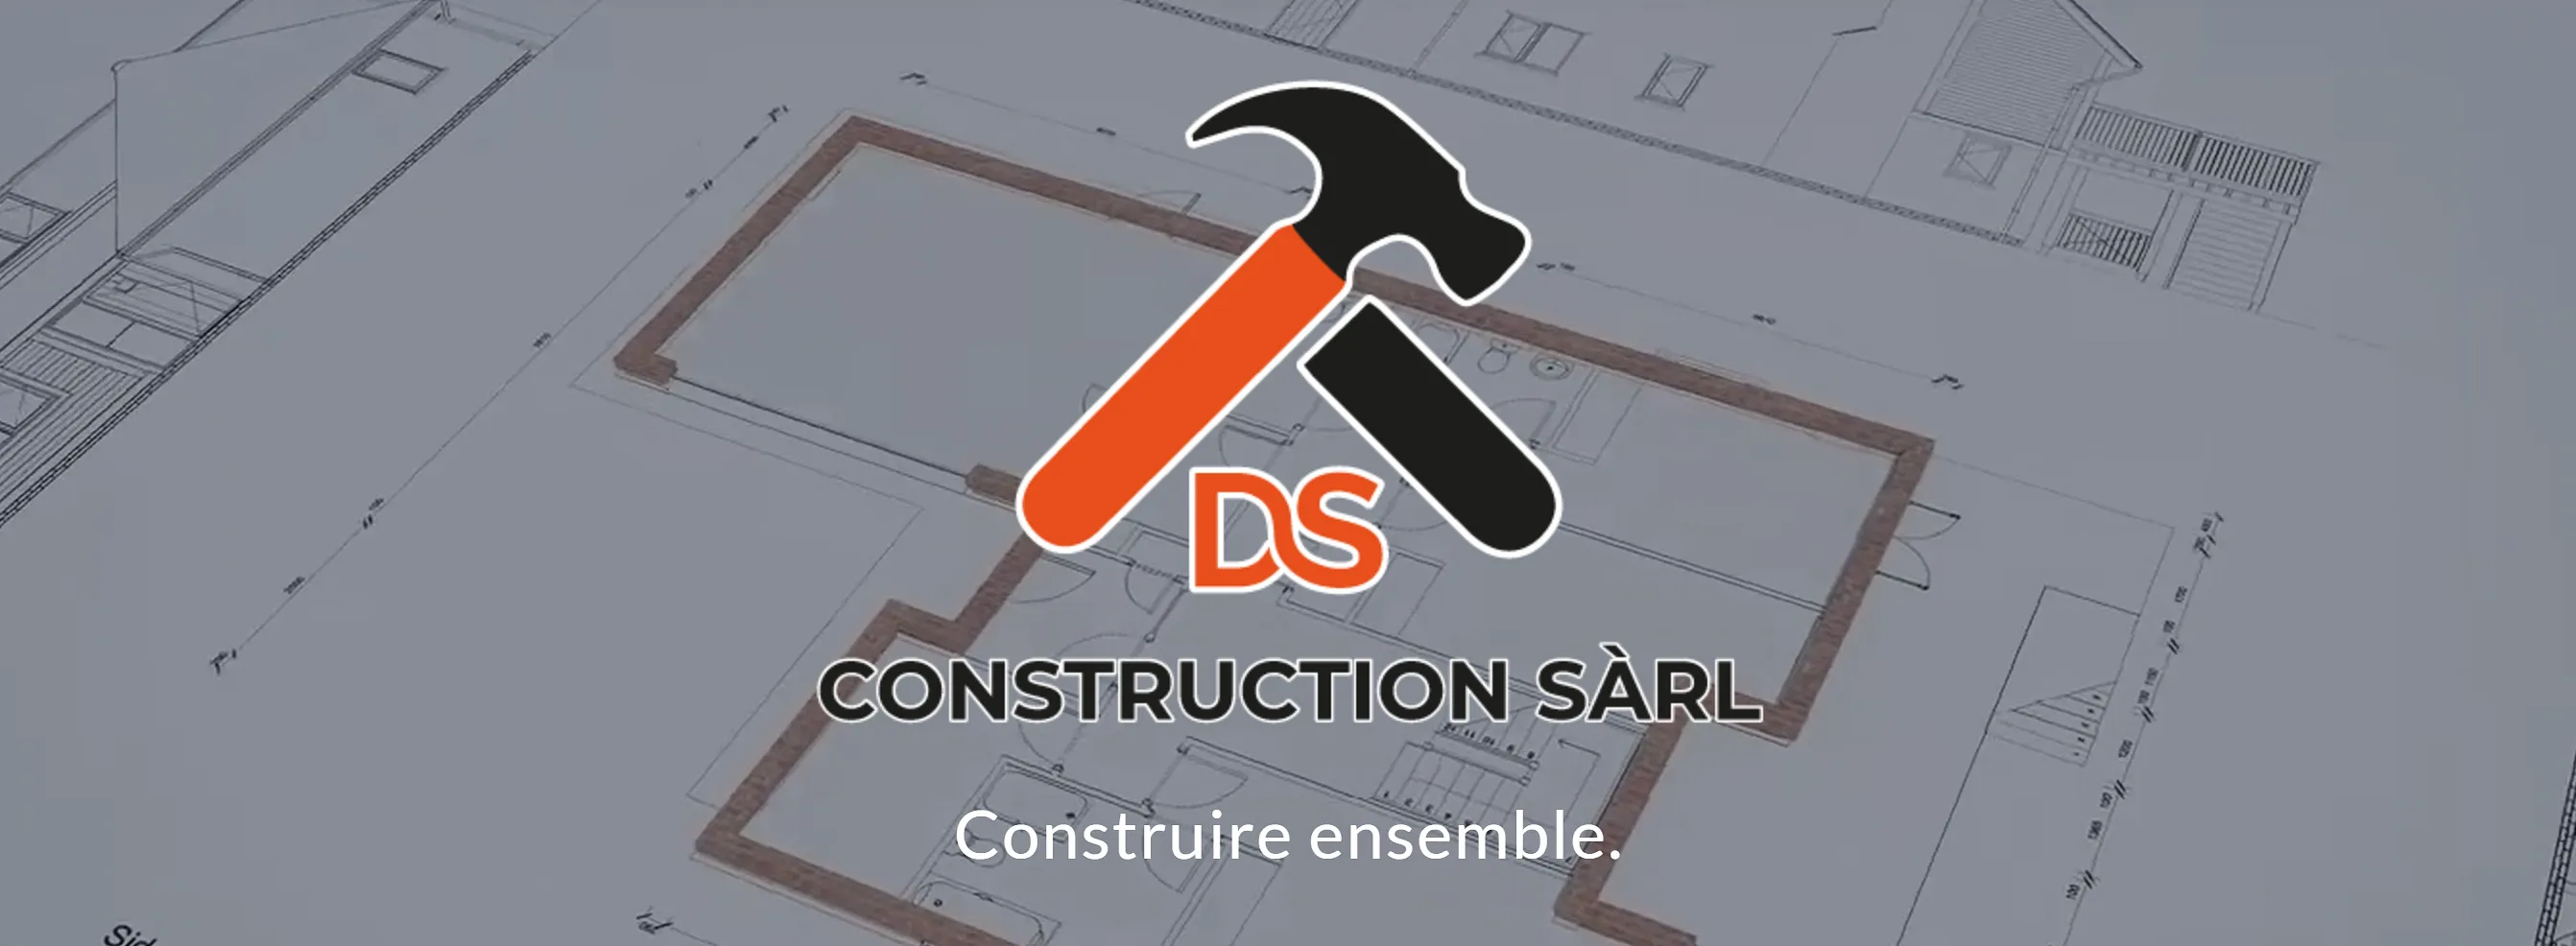 DS CONSTRUCTION SARL